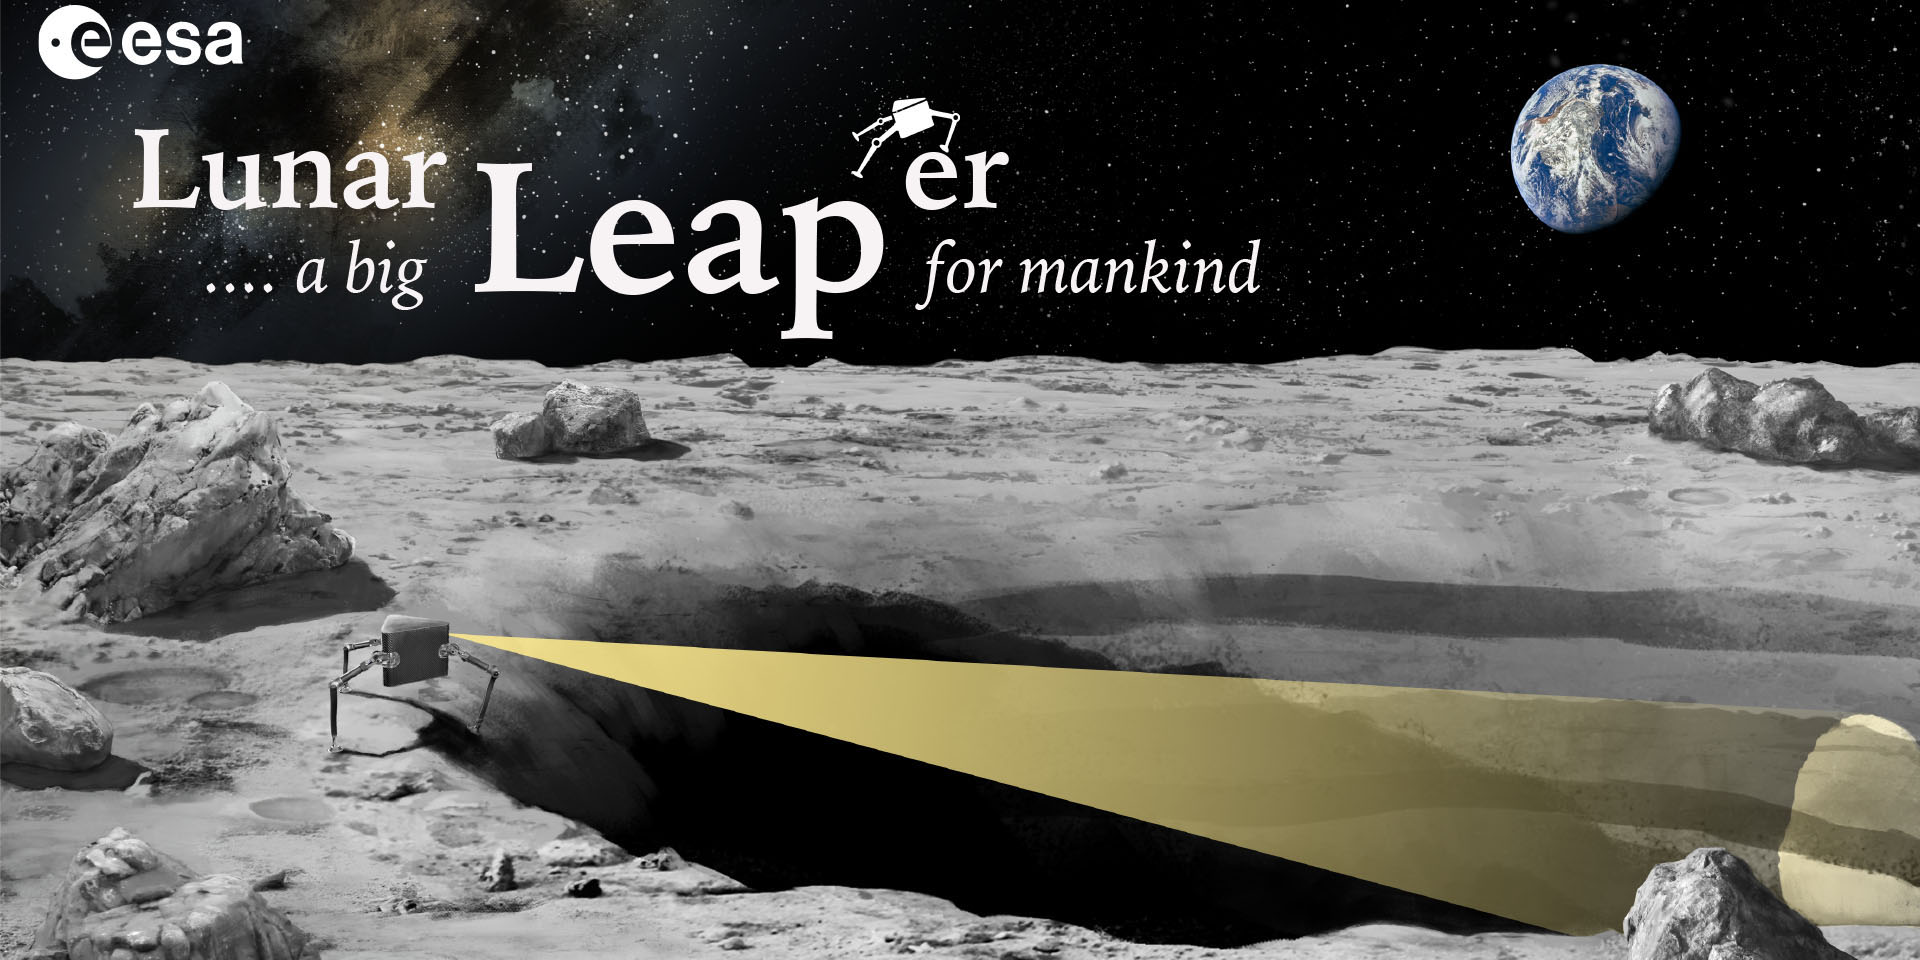 LunarLeaper Mission